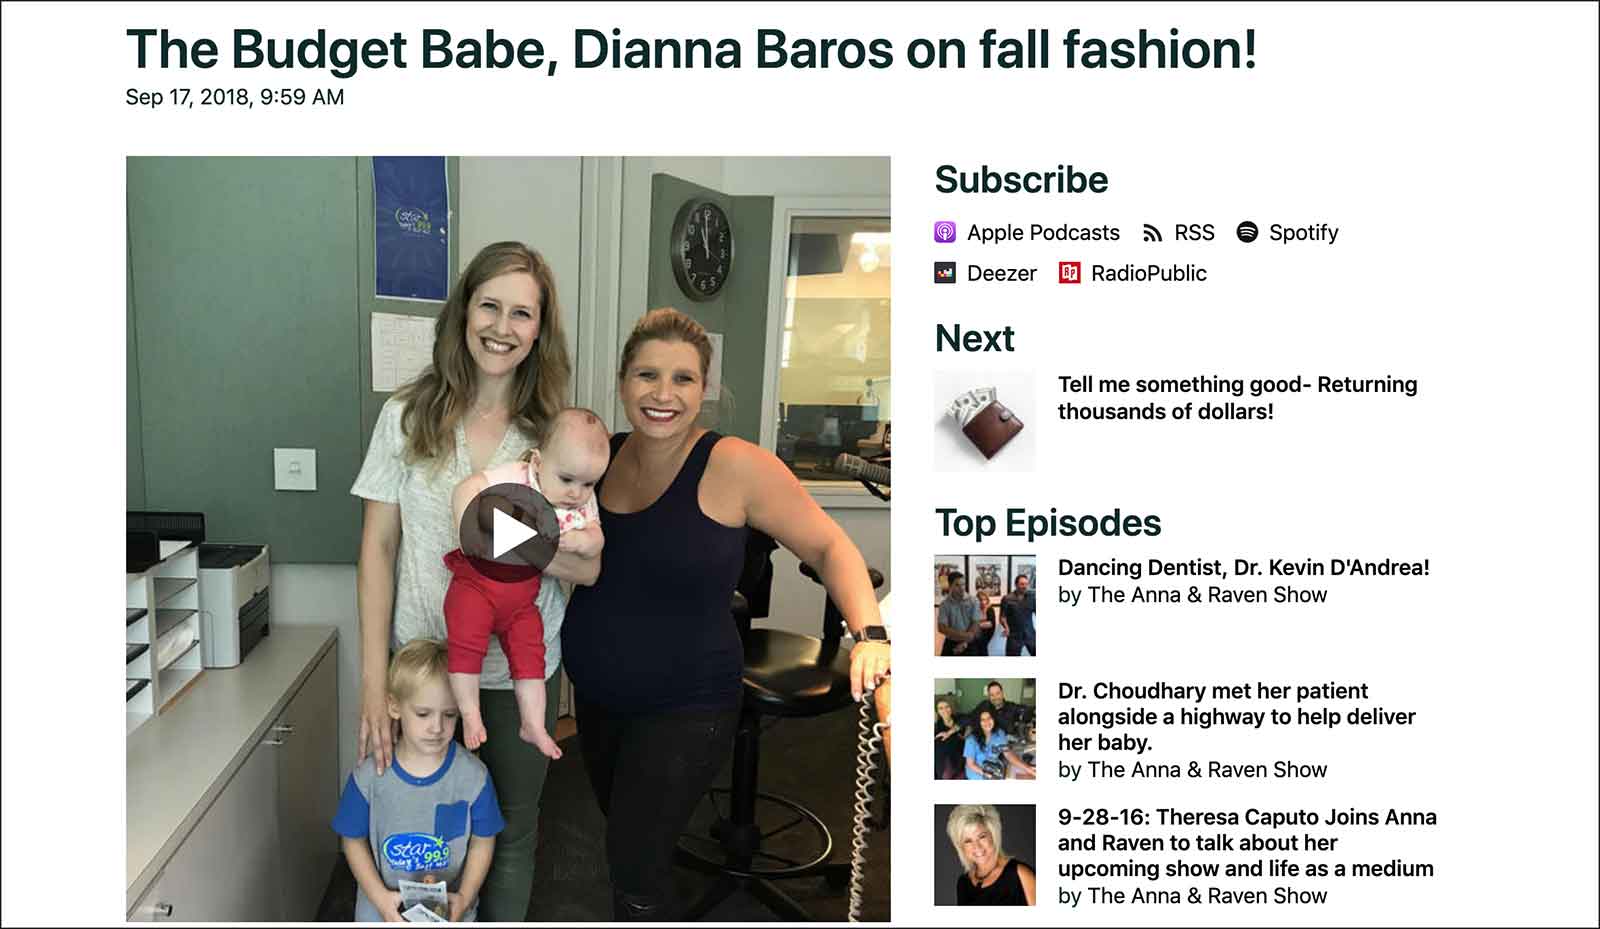 The Budget Babe Dianna Baros talks fall fashion on the Anna & Raven show Star 99.9